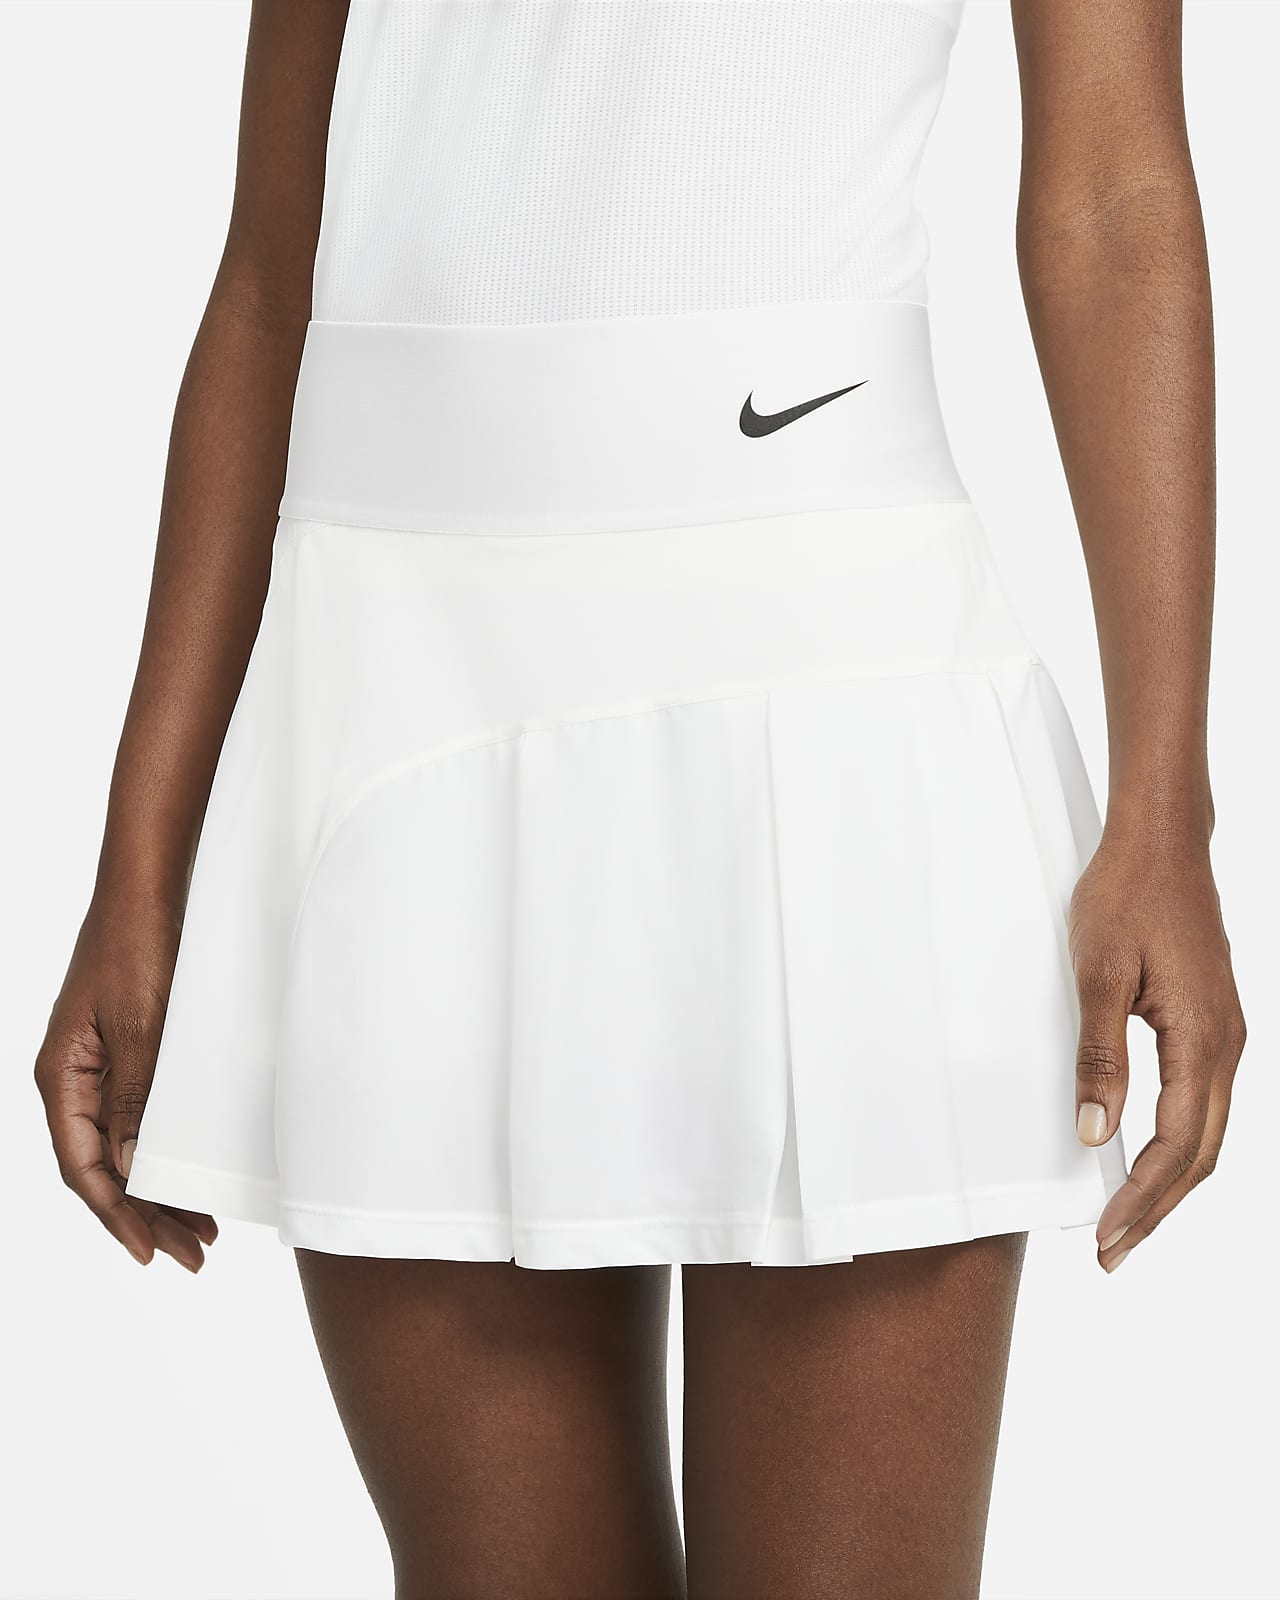 nike tennis skirt near me